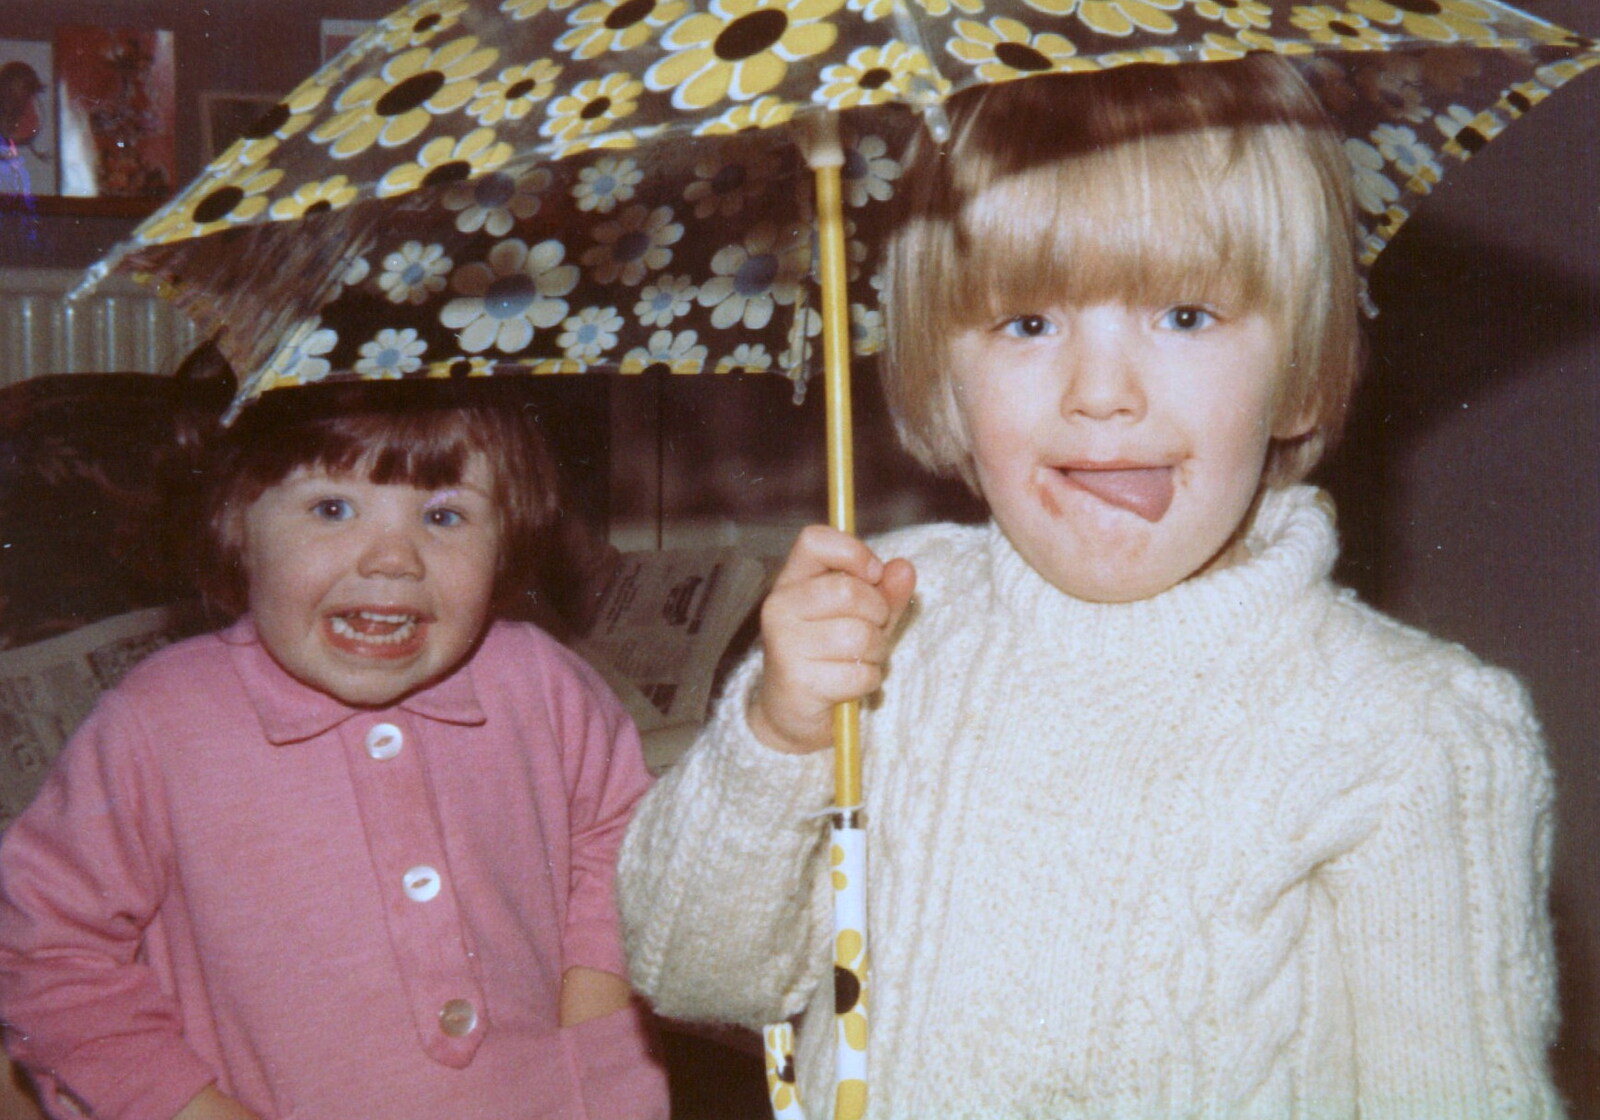 Family History: Danesbury Avenue, Tuckton, Christchurch, Dorset - 24th January 2020: Sis, Nosher and an umbrella indoors